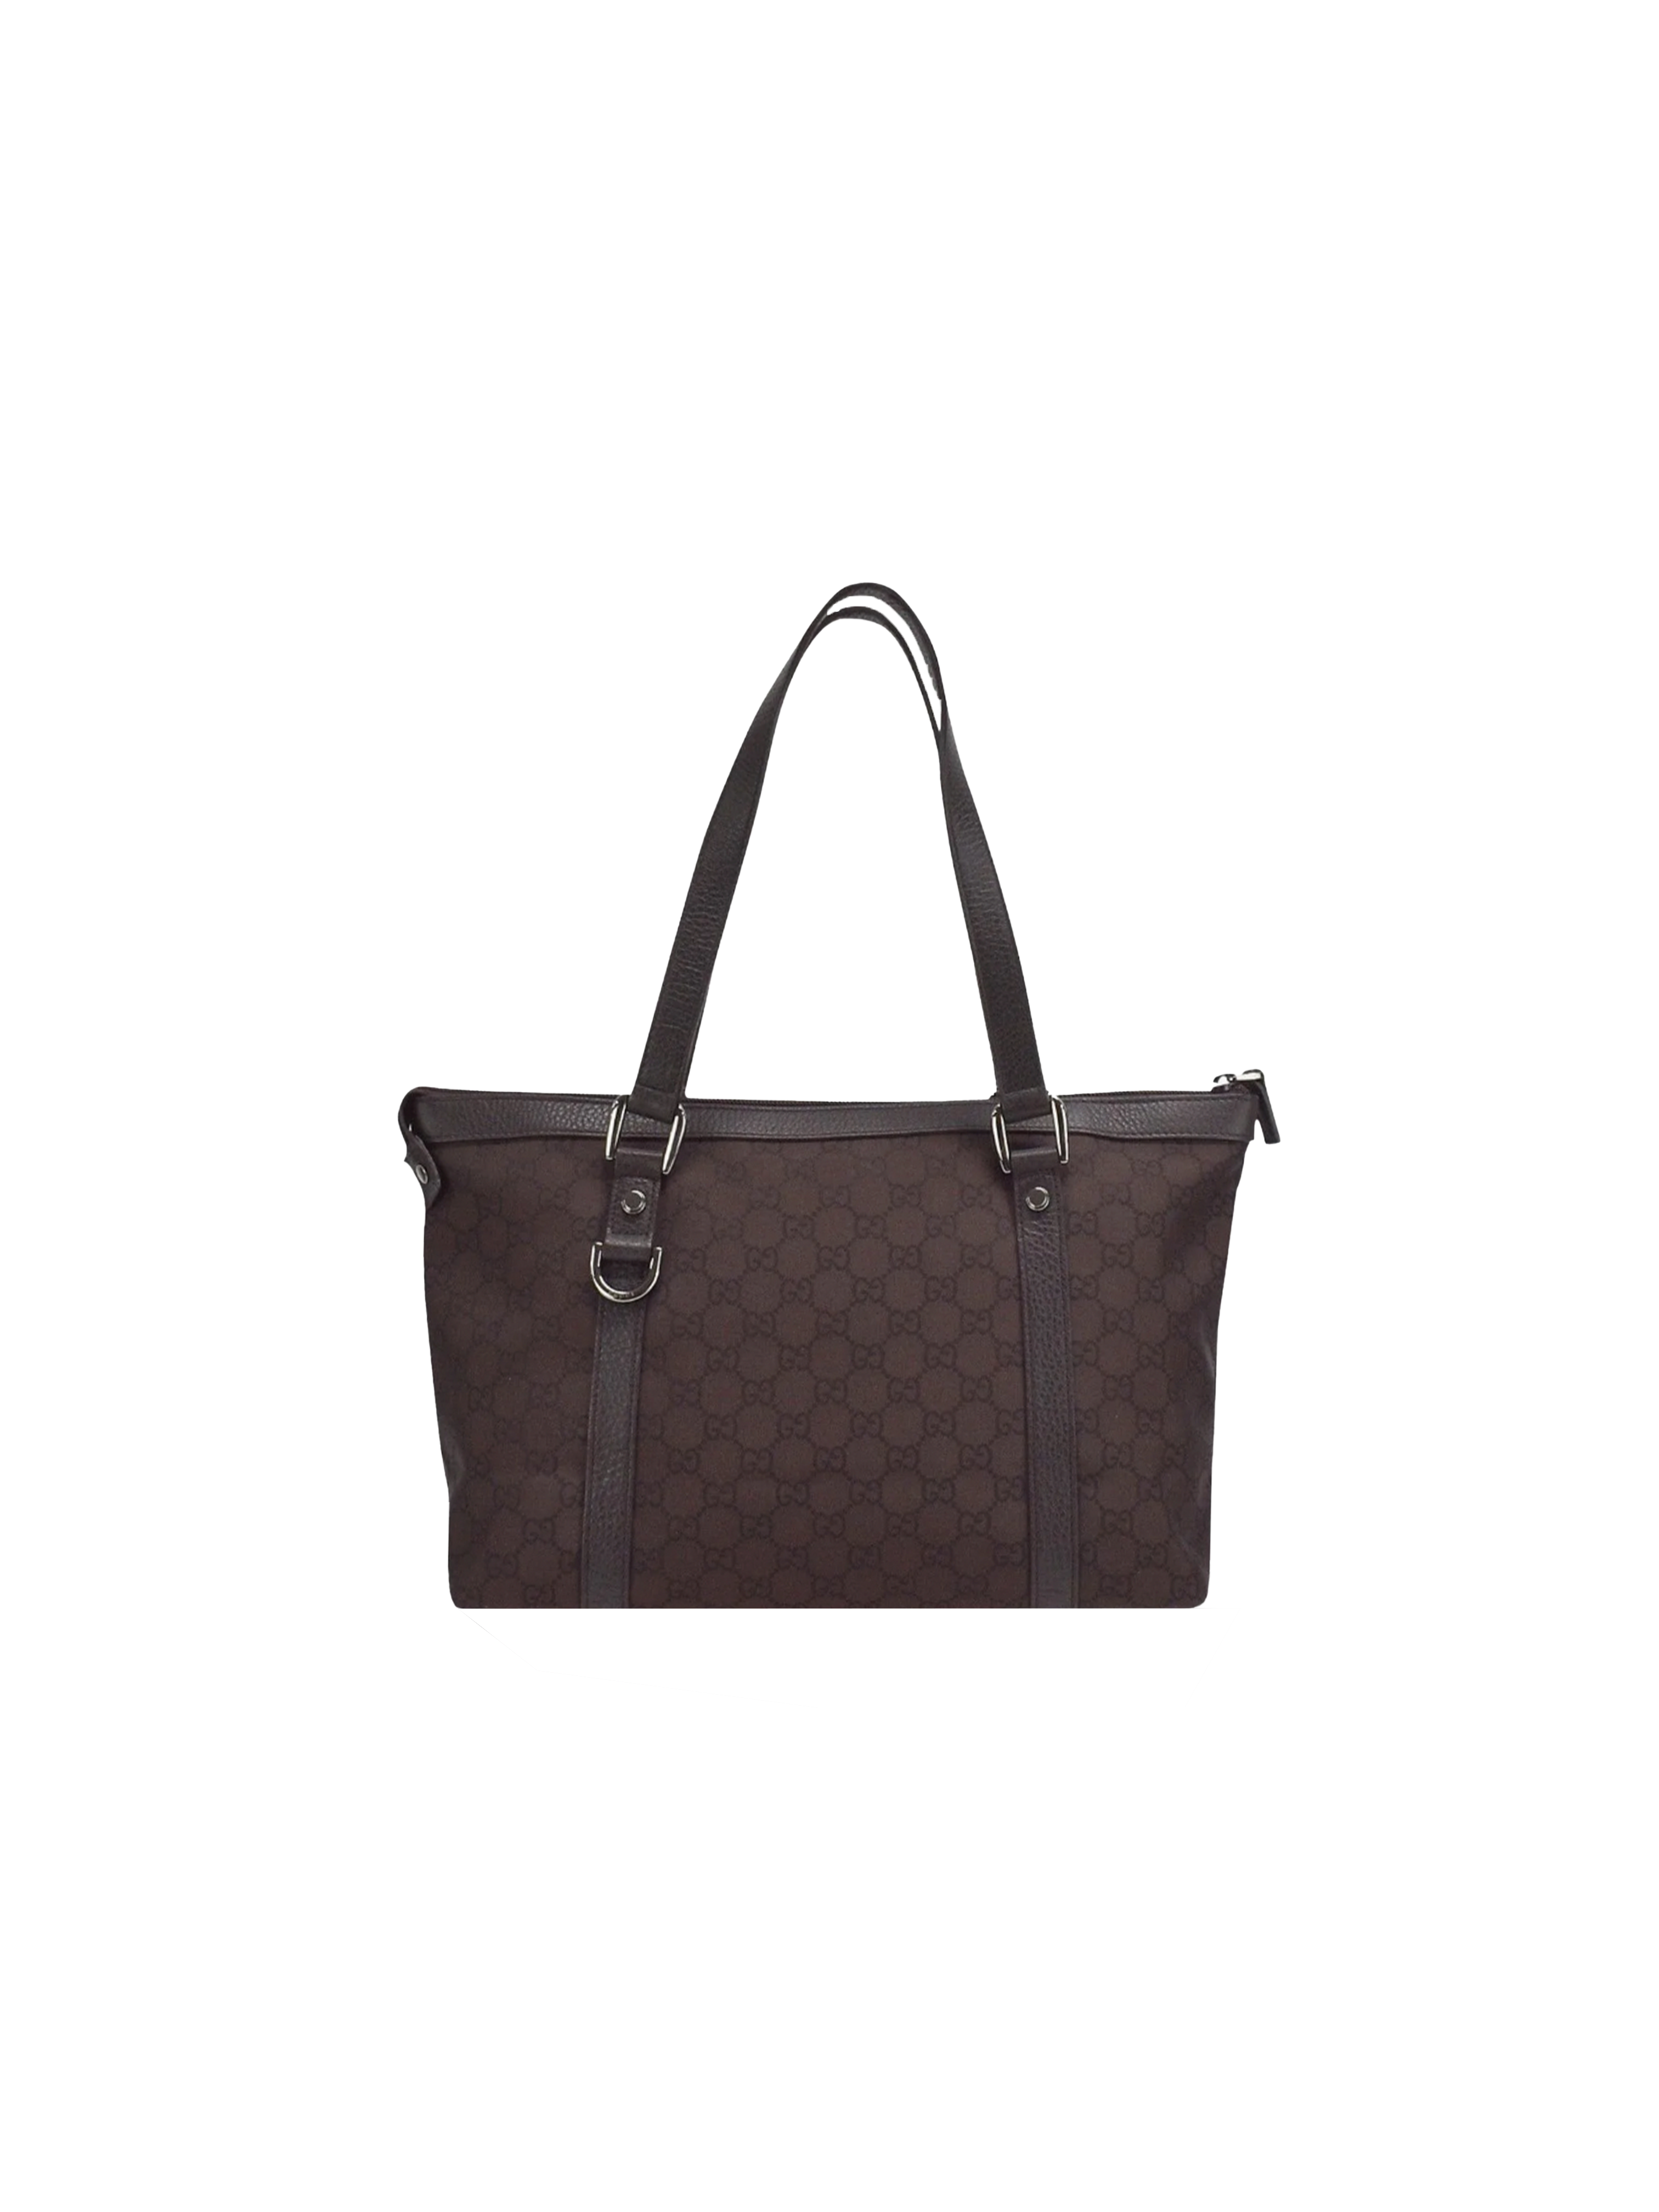 Gucci 2010s Brown Monogram Abbey Tote Bag